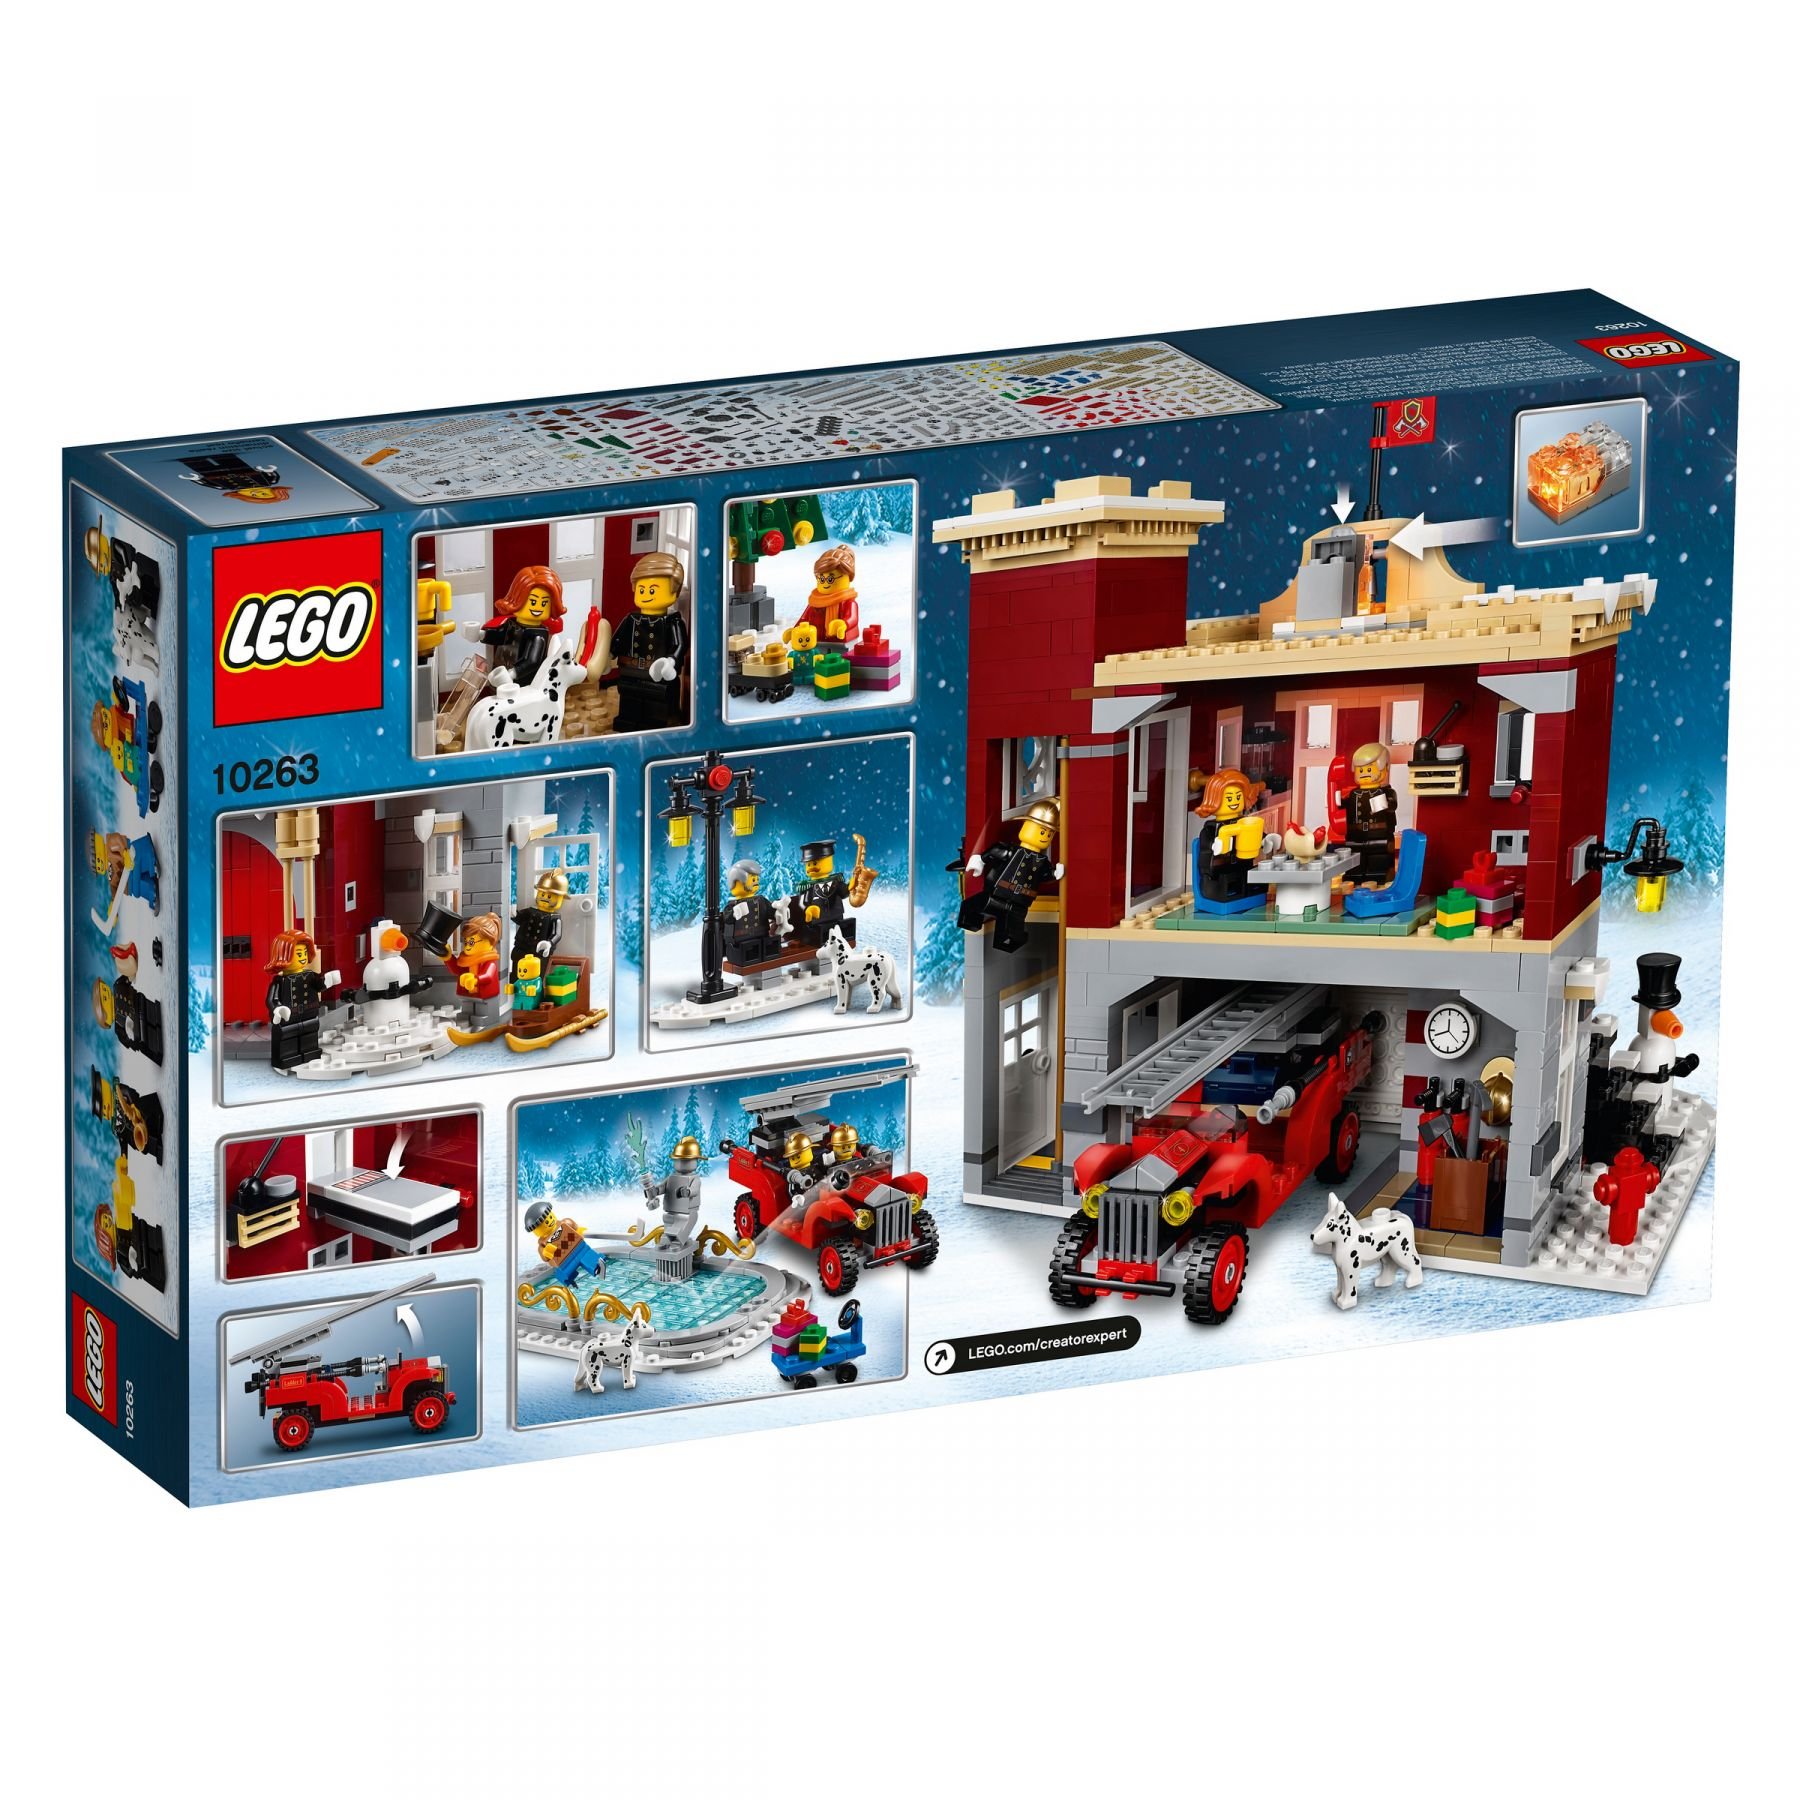 LEGO Advanced Models 10263 Winterliche Feuerwehrstation LEGO_10263_alt9.jpg